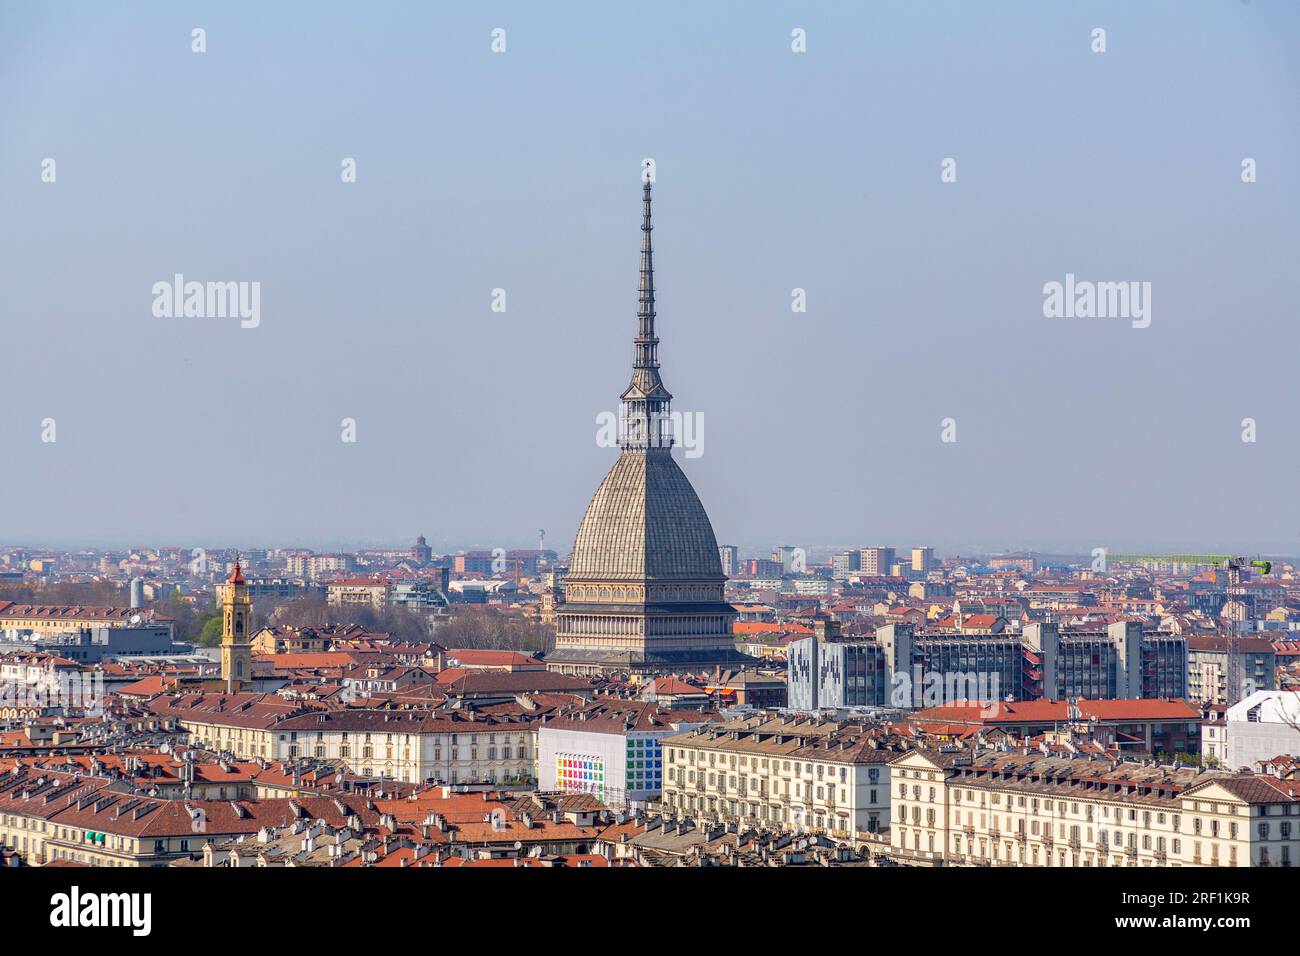 Turín, Italia - 28 de marzo de 2022: Vista aérea de la ciudad italiana de Turín, la capital de la región del Piamonte. Foto de stock